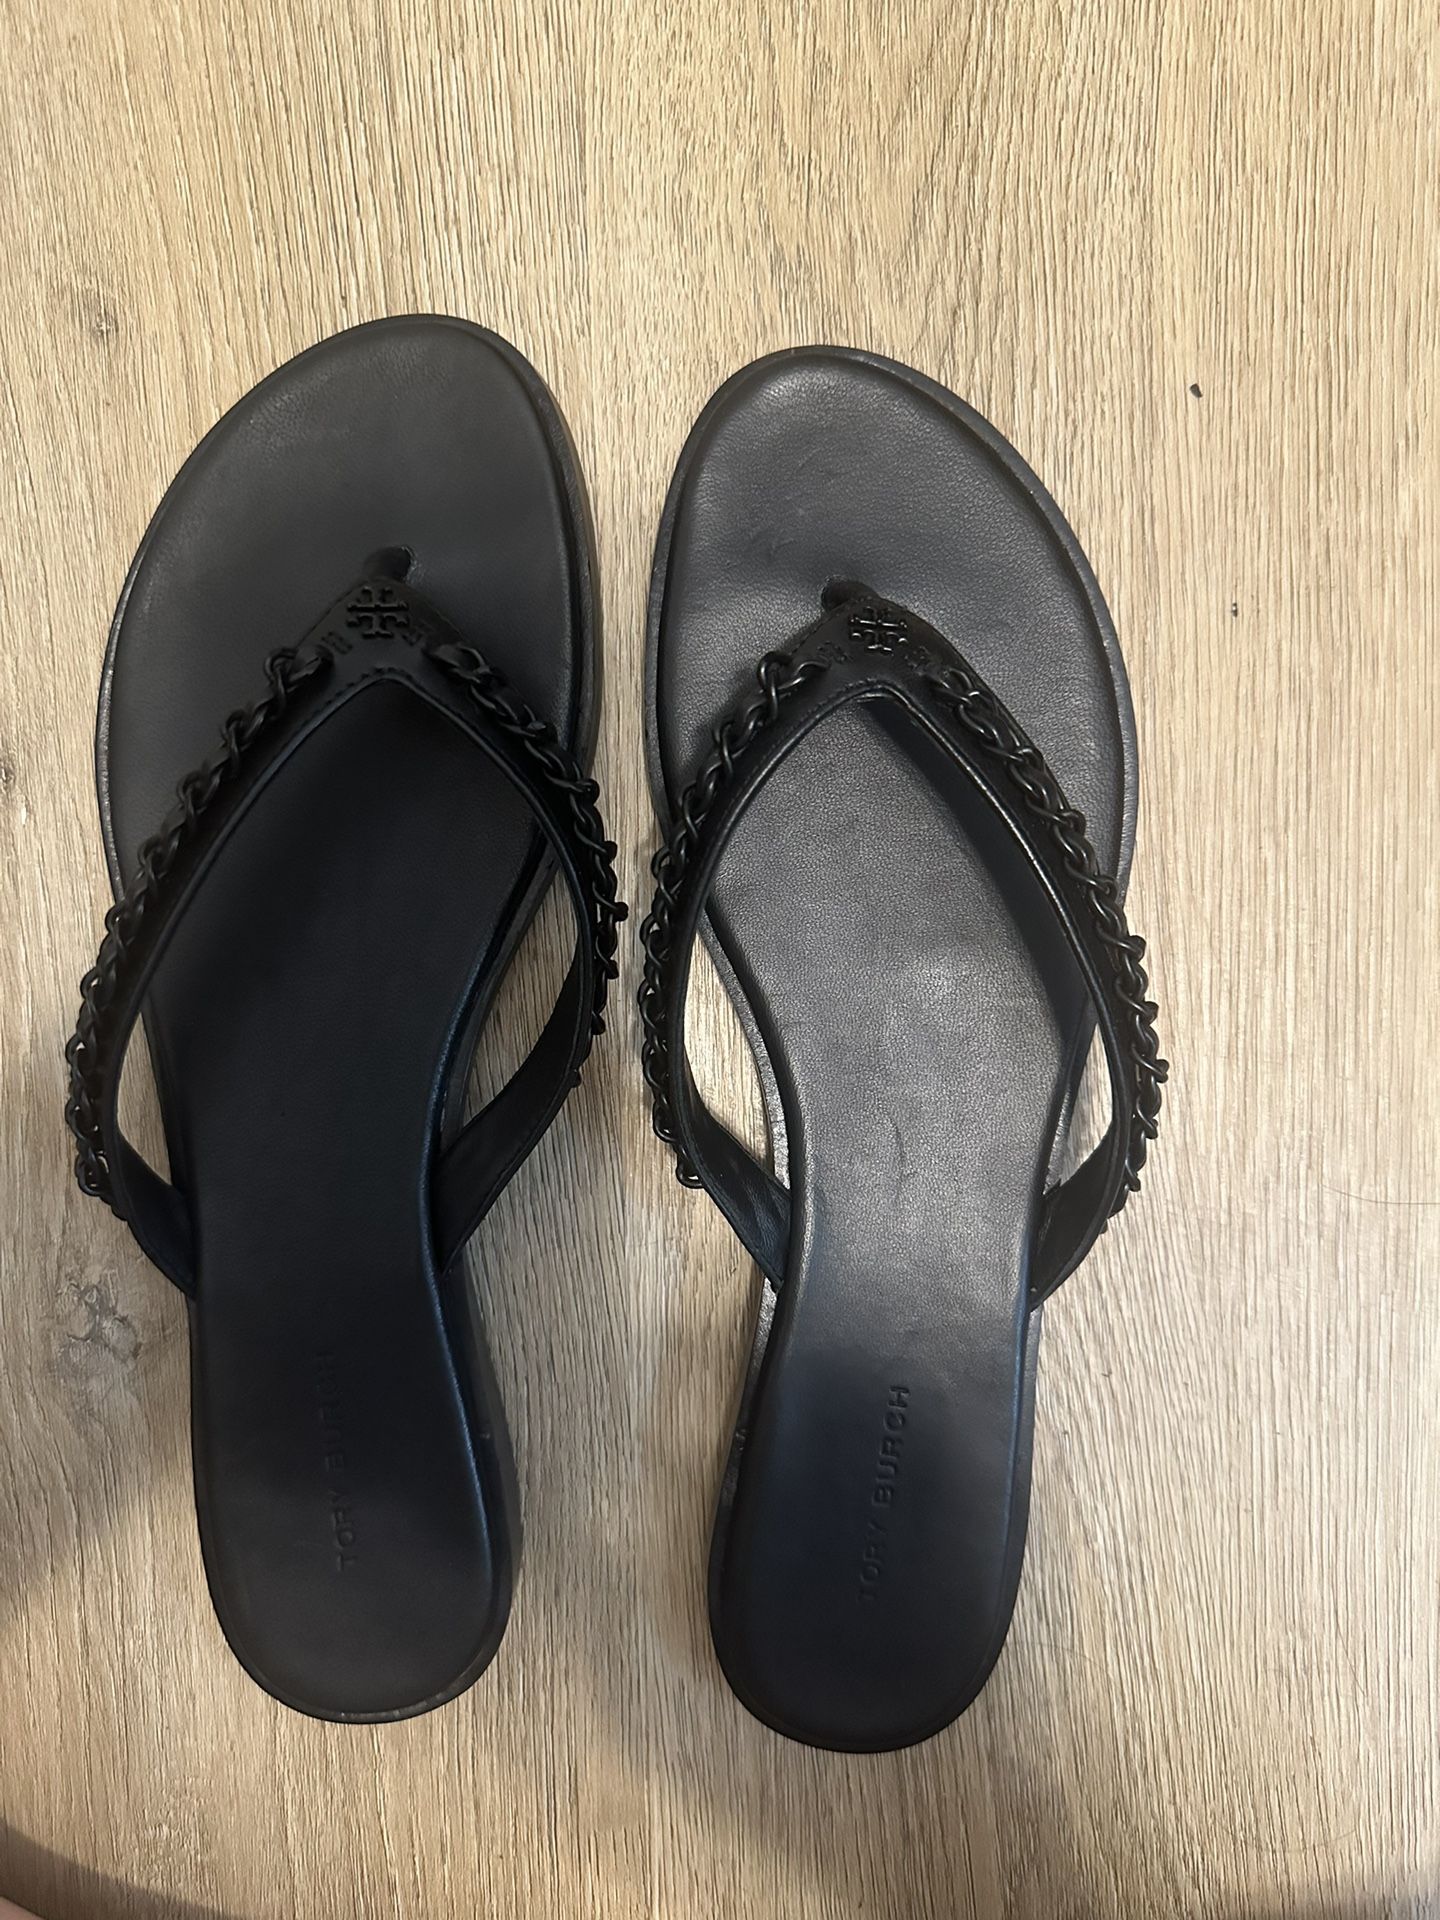 Tory Burch Sandals Size 9.5 Black